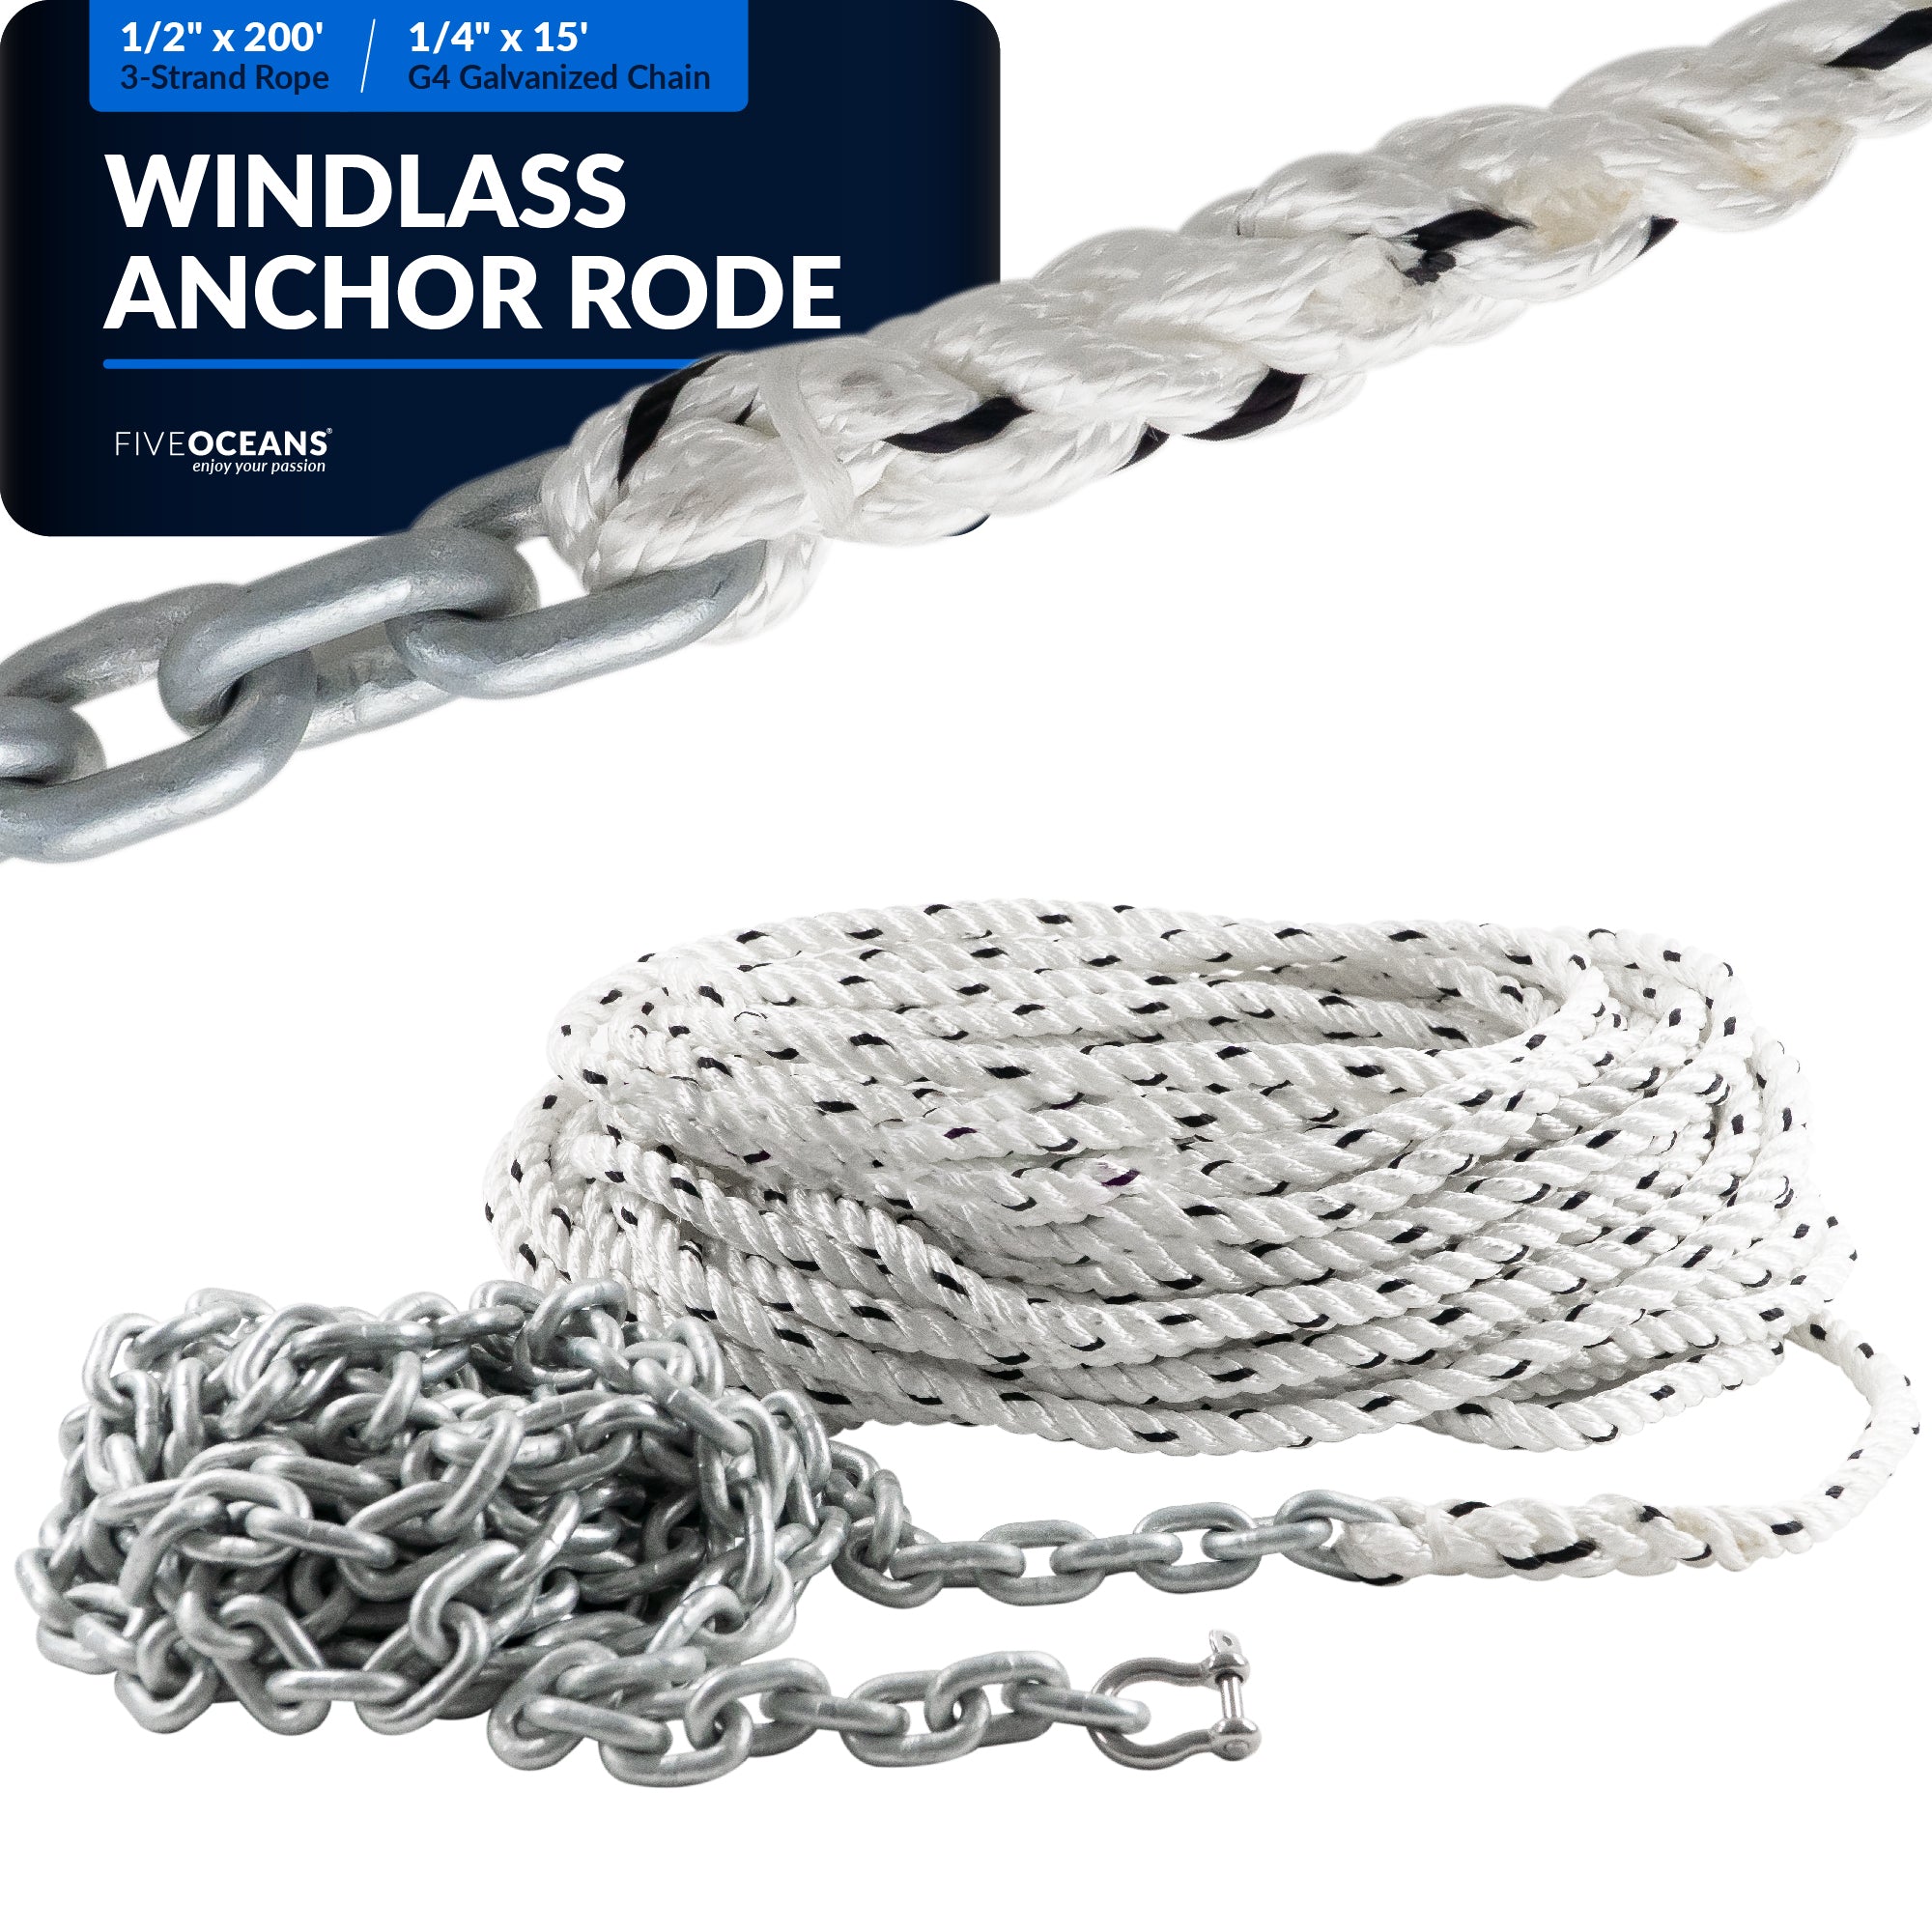 Windlass Anchor Rode, 1/2" x 200' Nylon 3-Strand Rope,  1/4" x 15' G4 Hot-Dipped Galvanized Steel Chain - FO4287